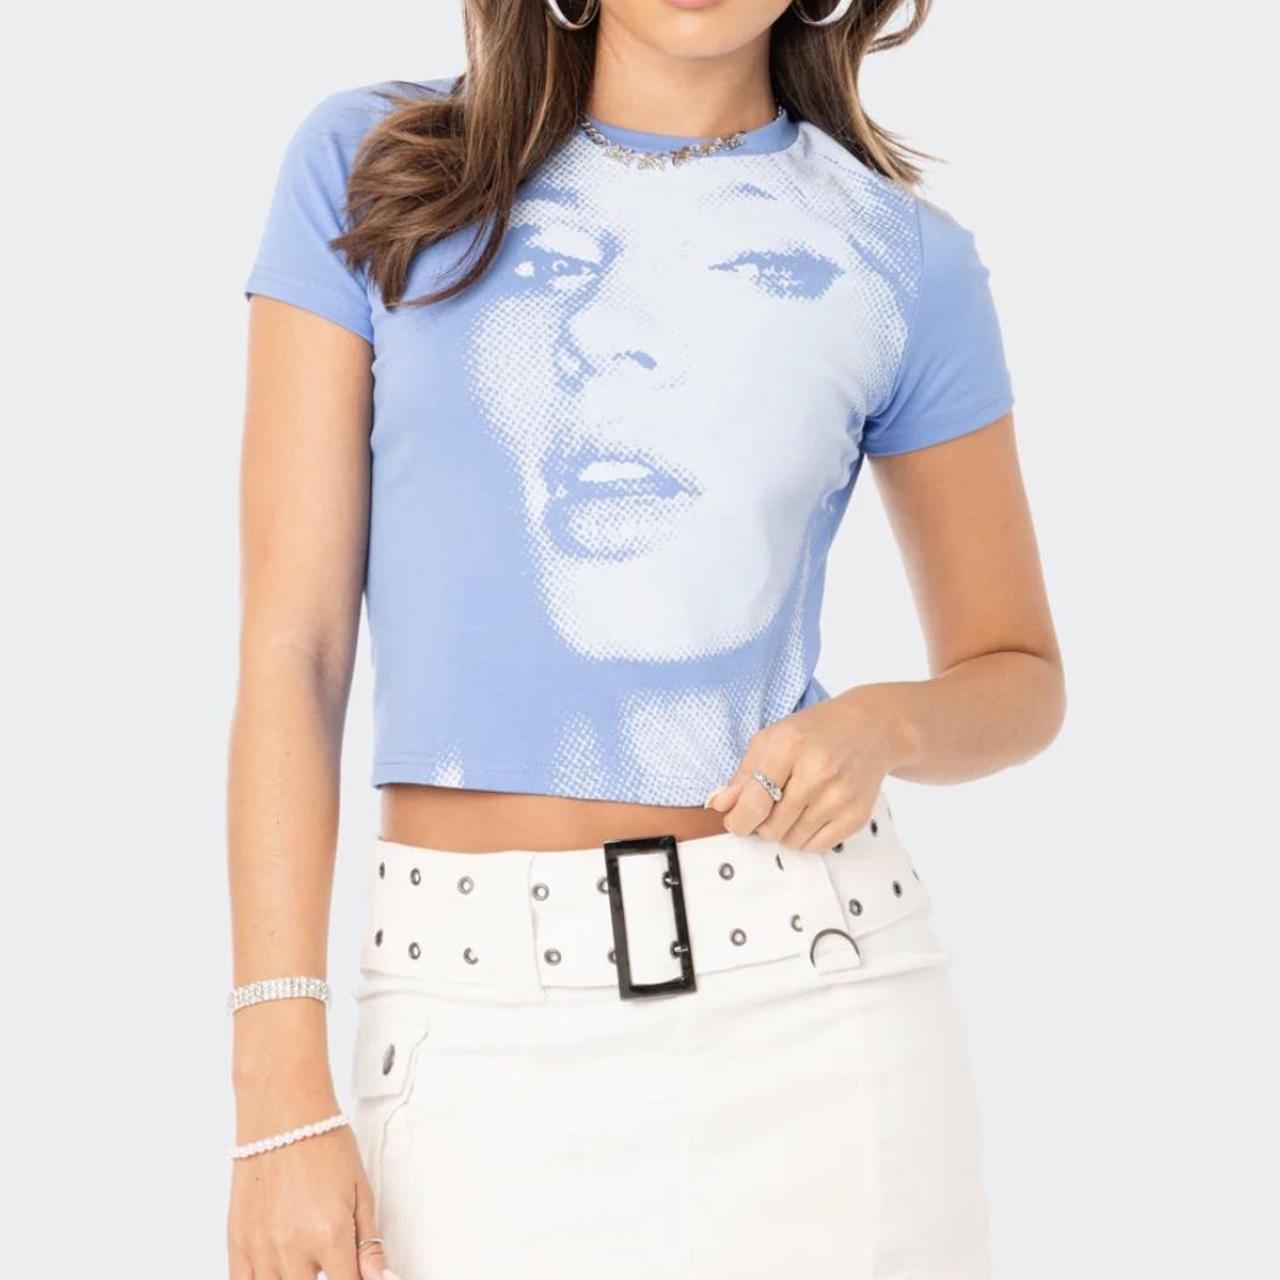 Edikted Women's Blue and White T-shirt (2)